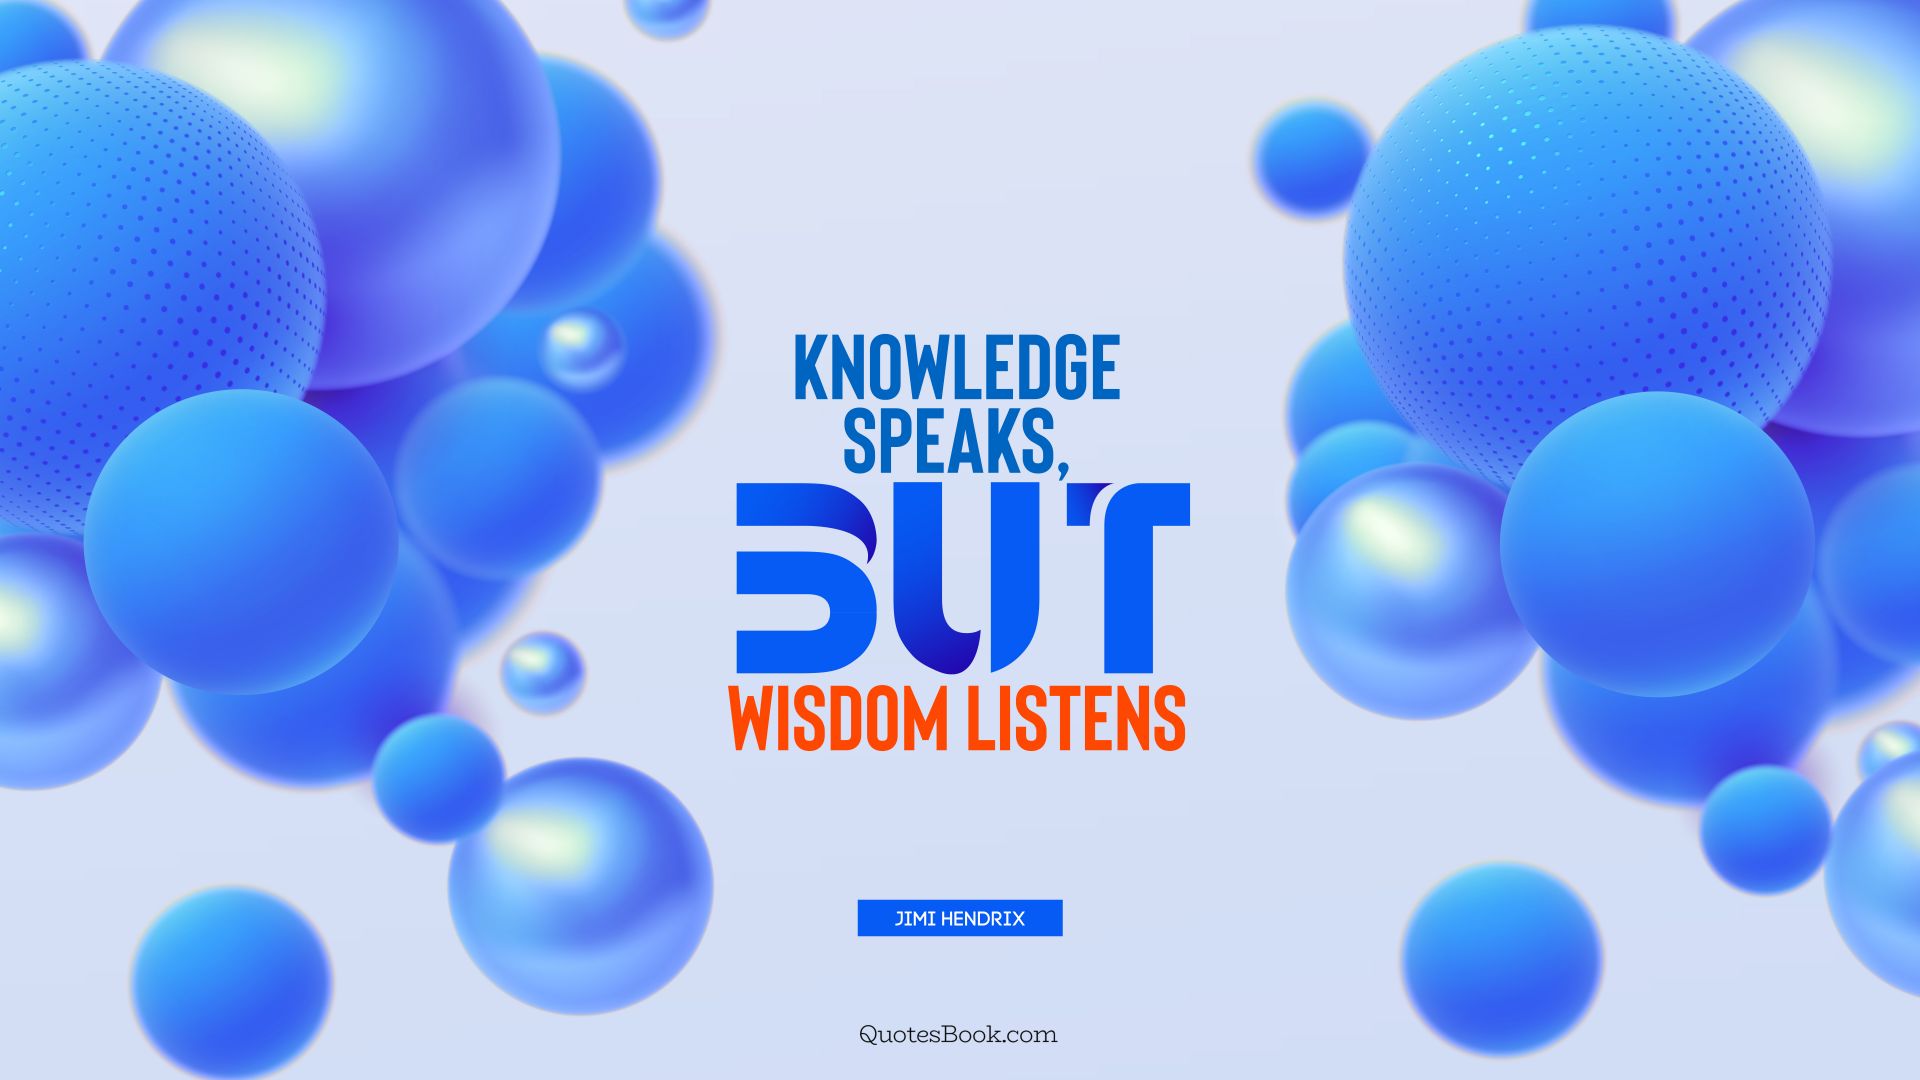 Knowledge speaks, but wisdom listens. - Quote by Jimi Hendrix